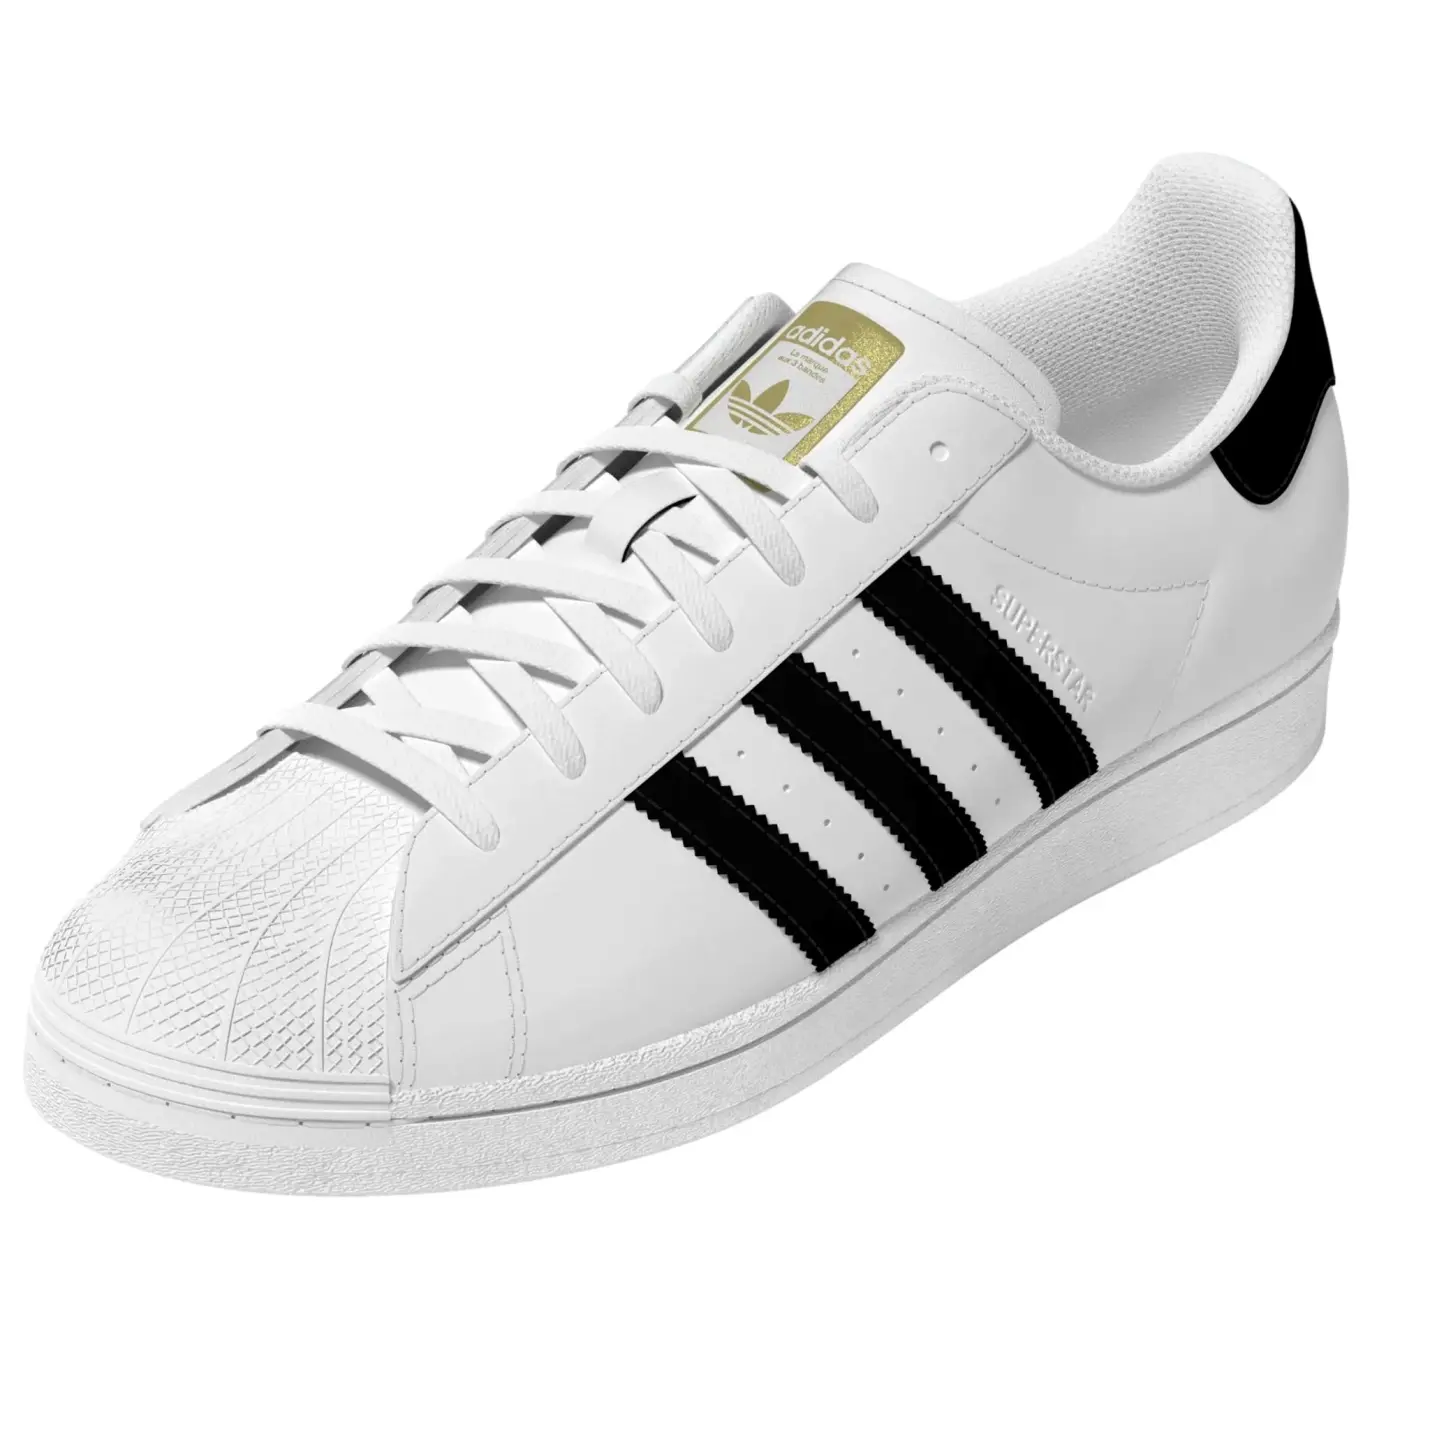 Adidas Adv Superstar Bianca Shoes  black white